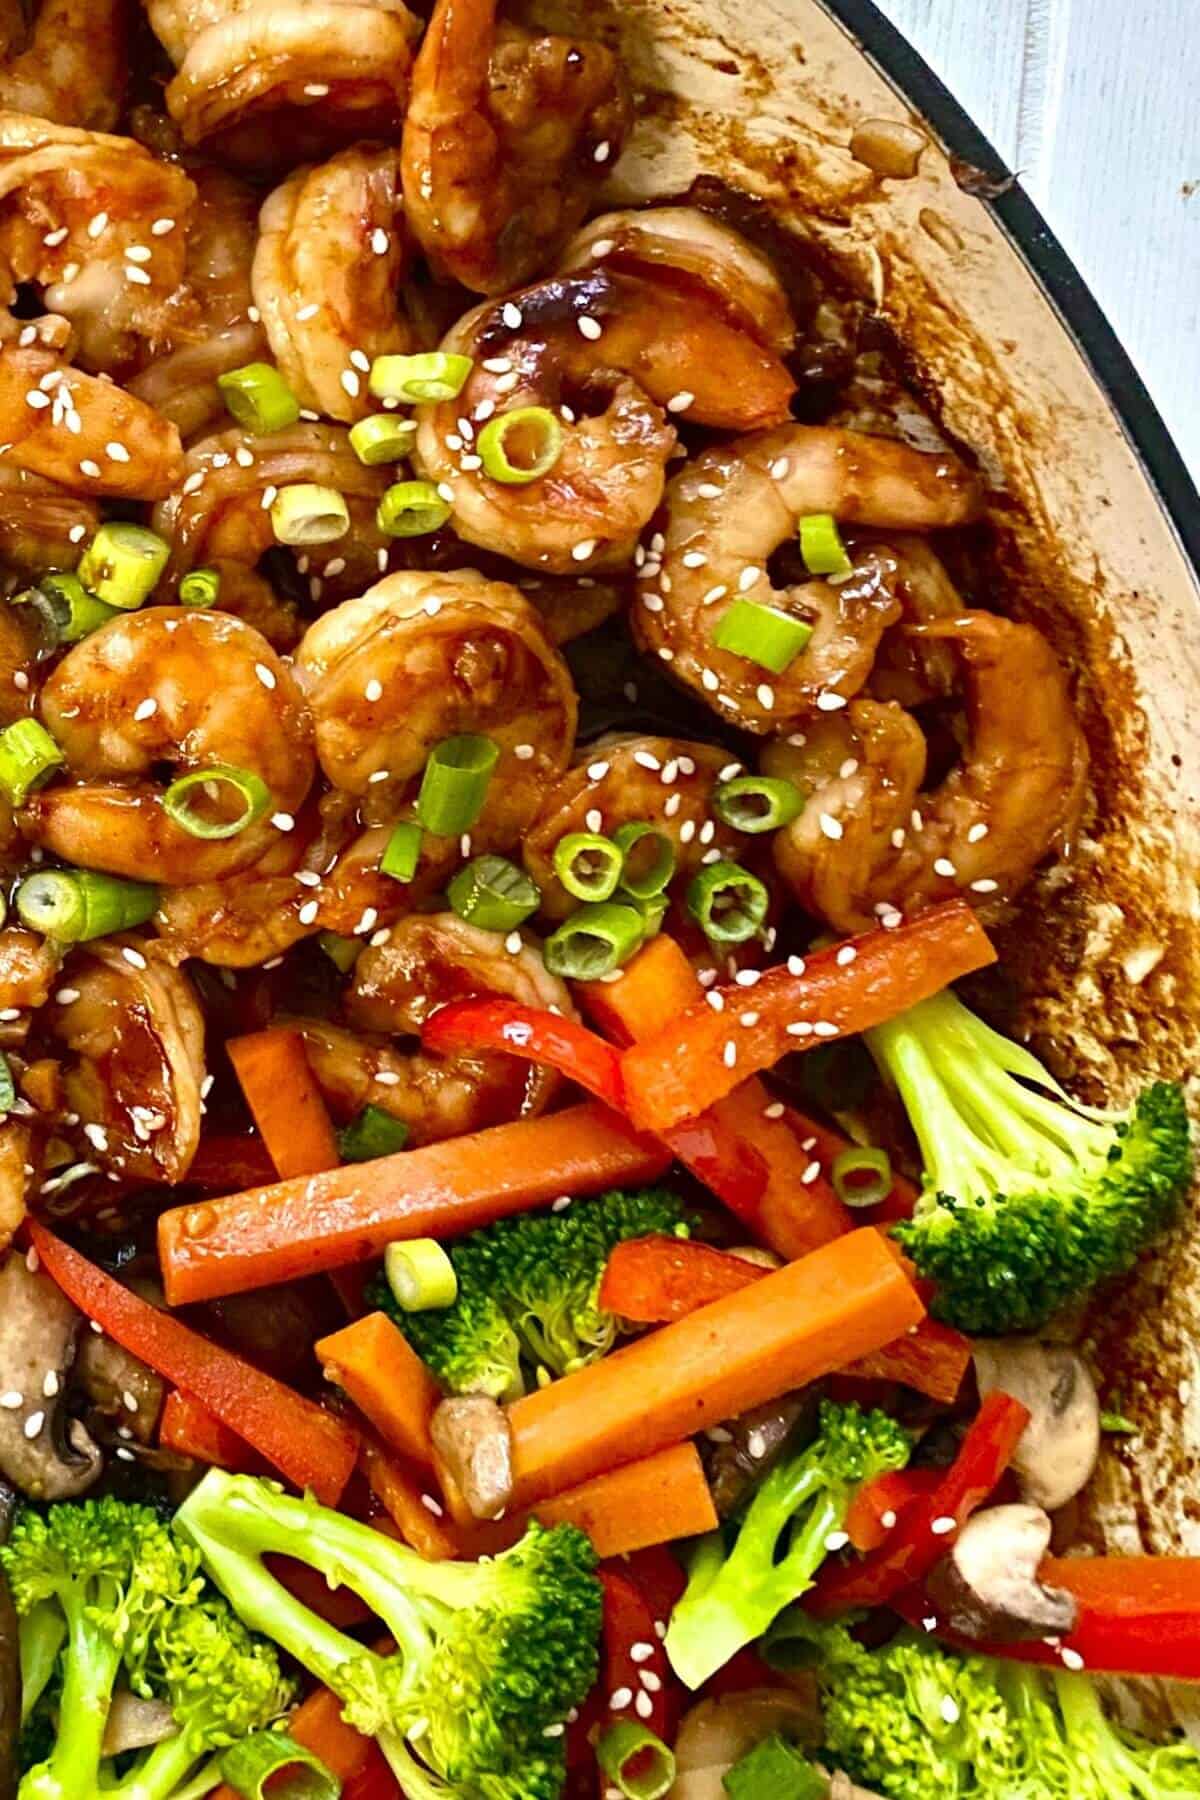 hibachi shrimp, mushrooms, broccoli and carrots in a pan.